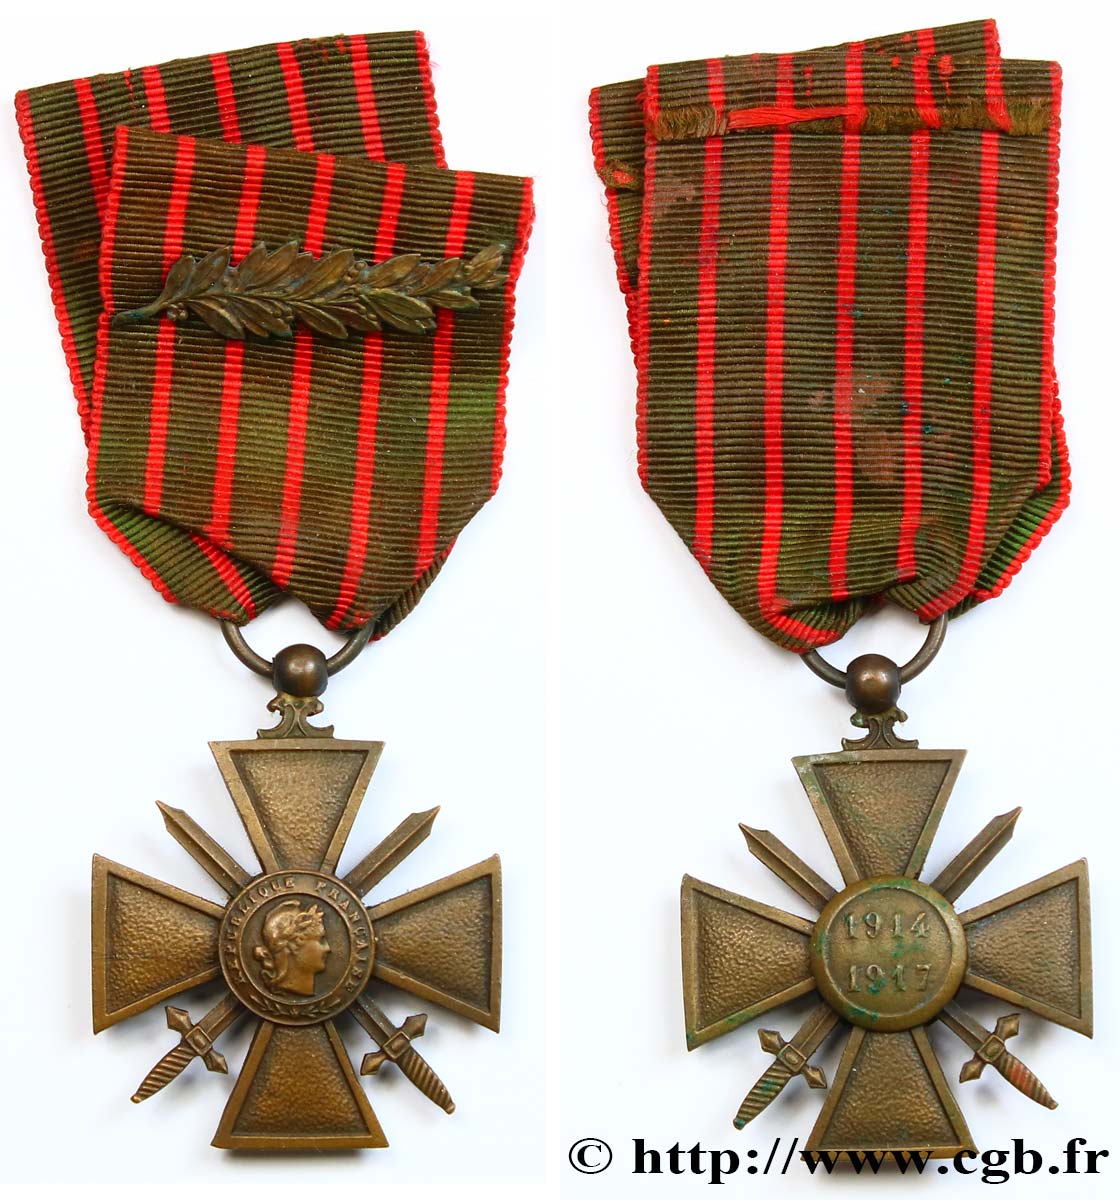 III REPUBLIC Croix de guerre, 1914-1917 AU